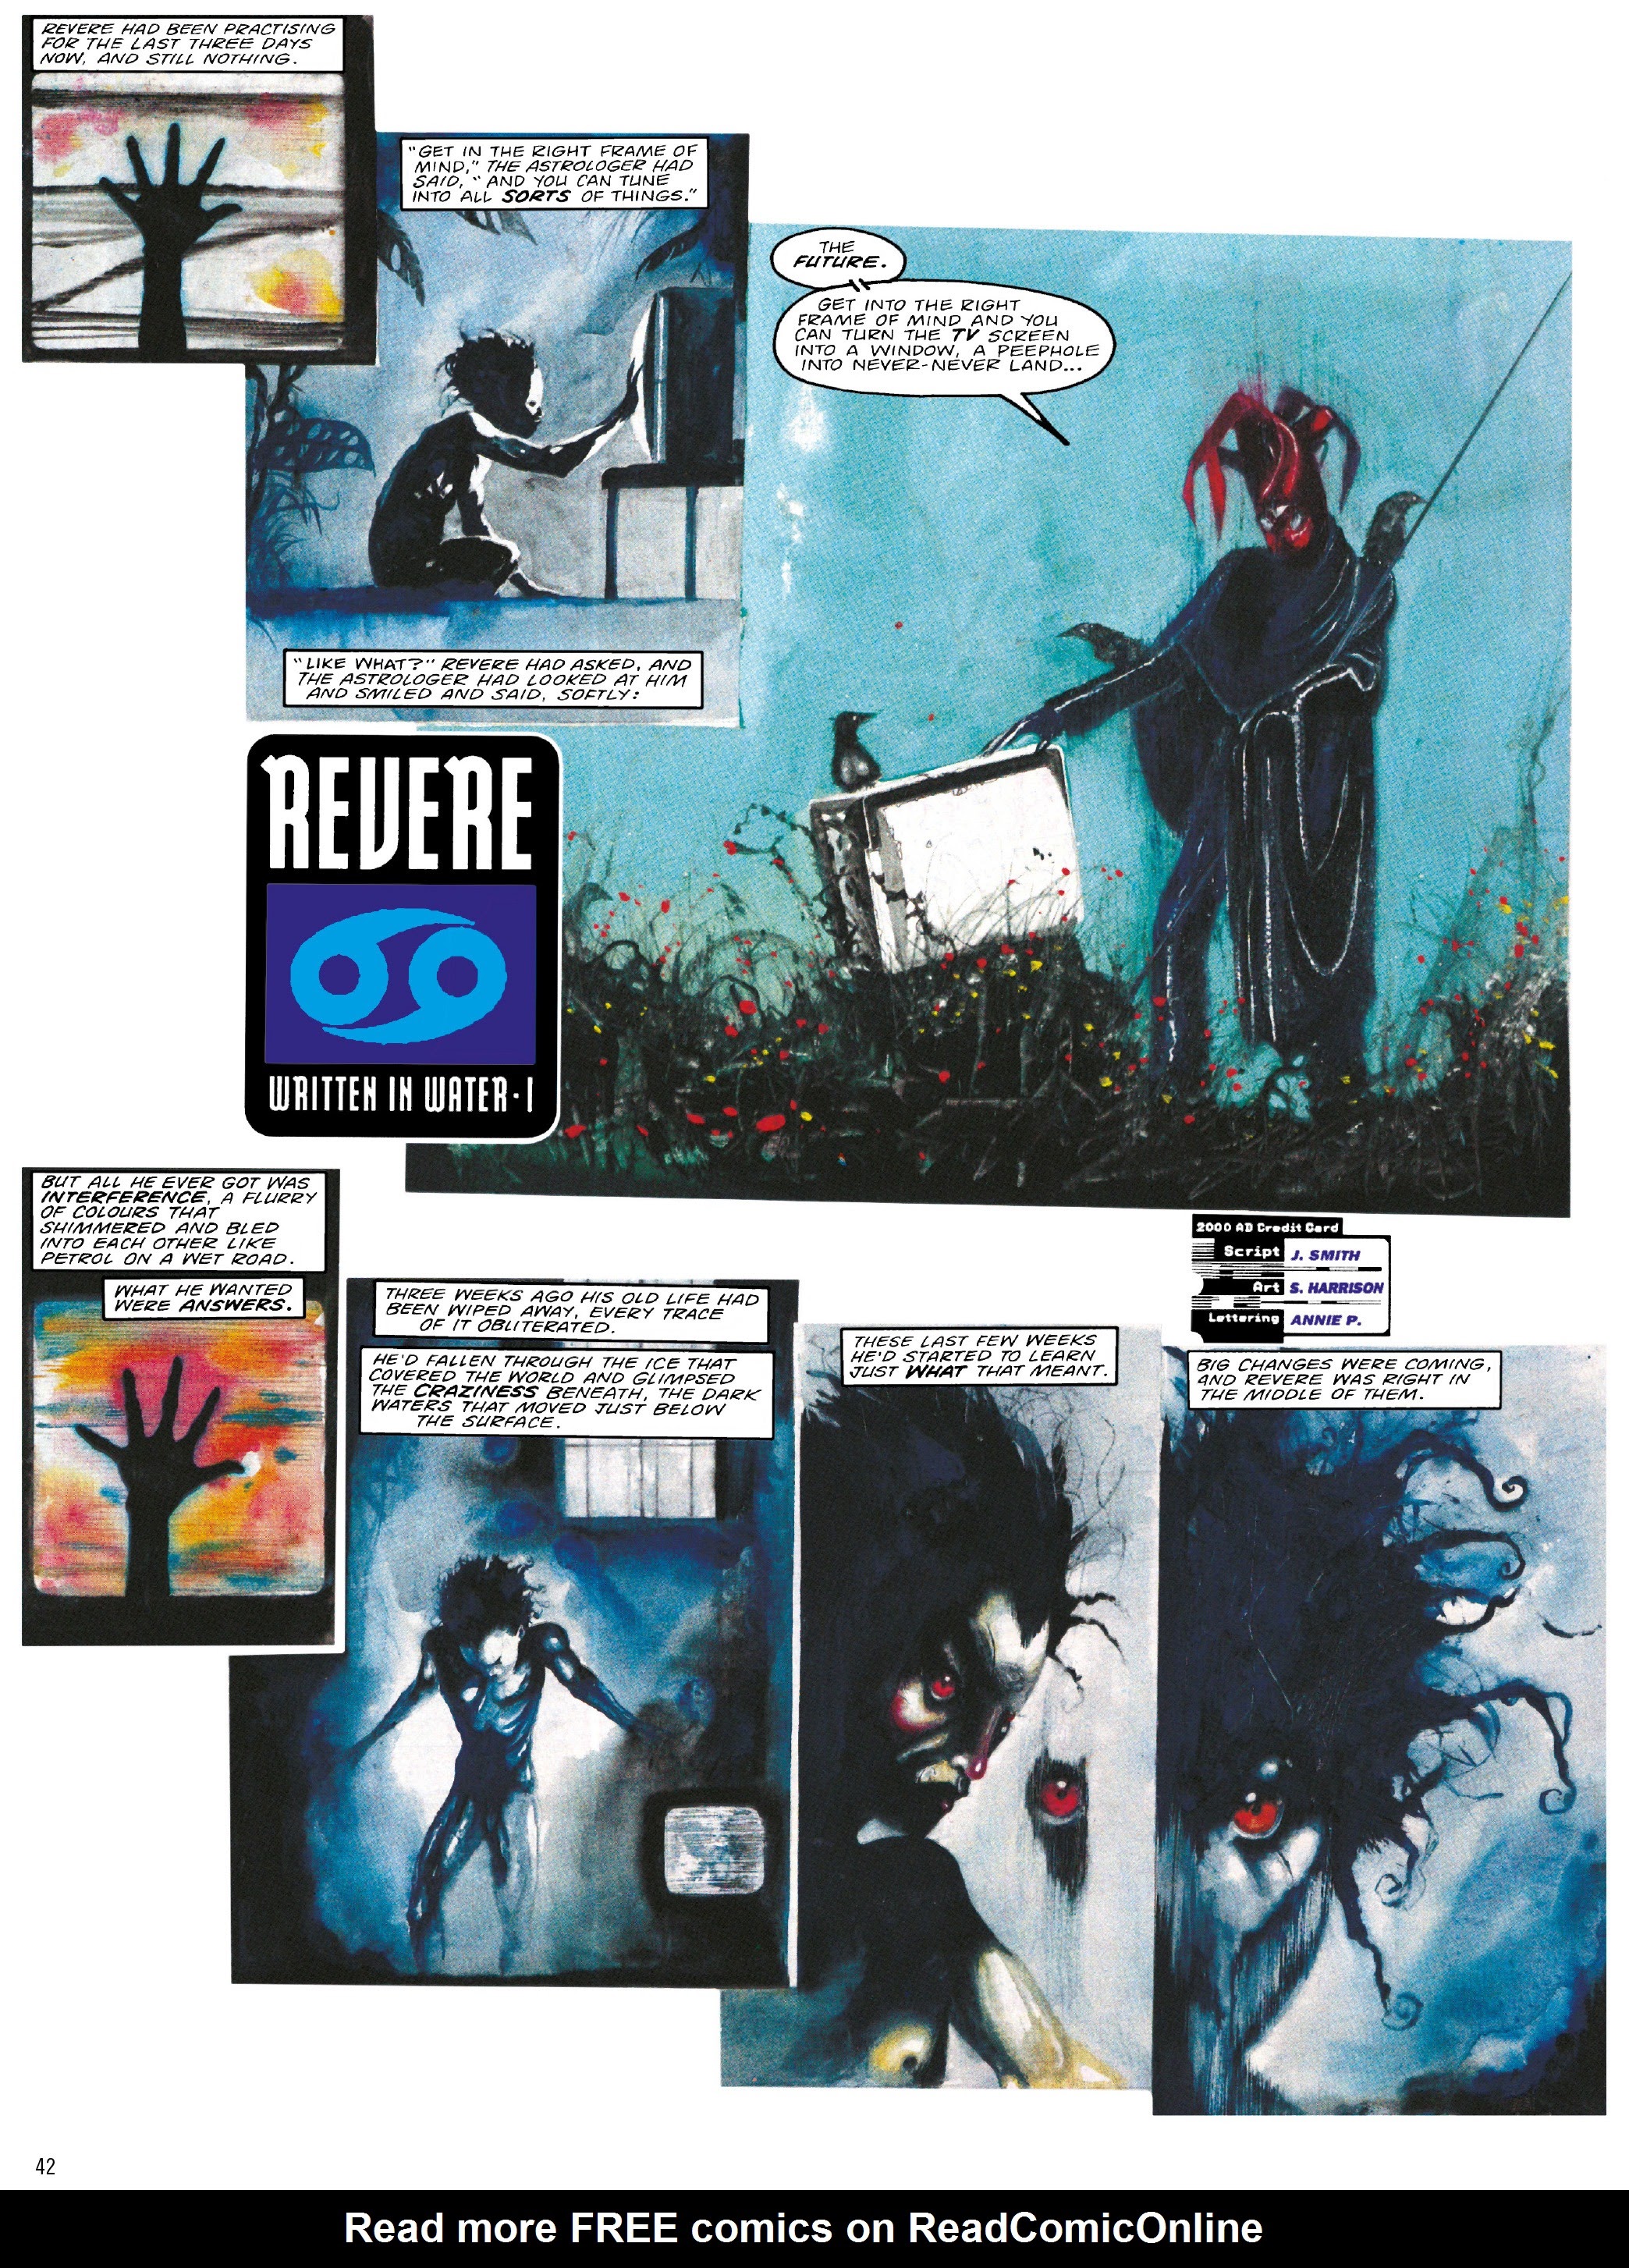 Read online Revere comic -  Issue # TPB - 44